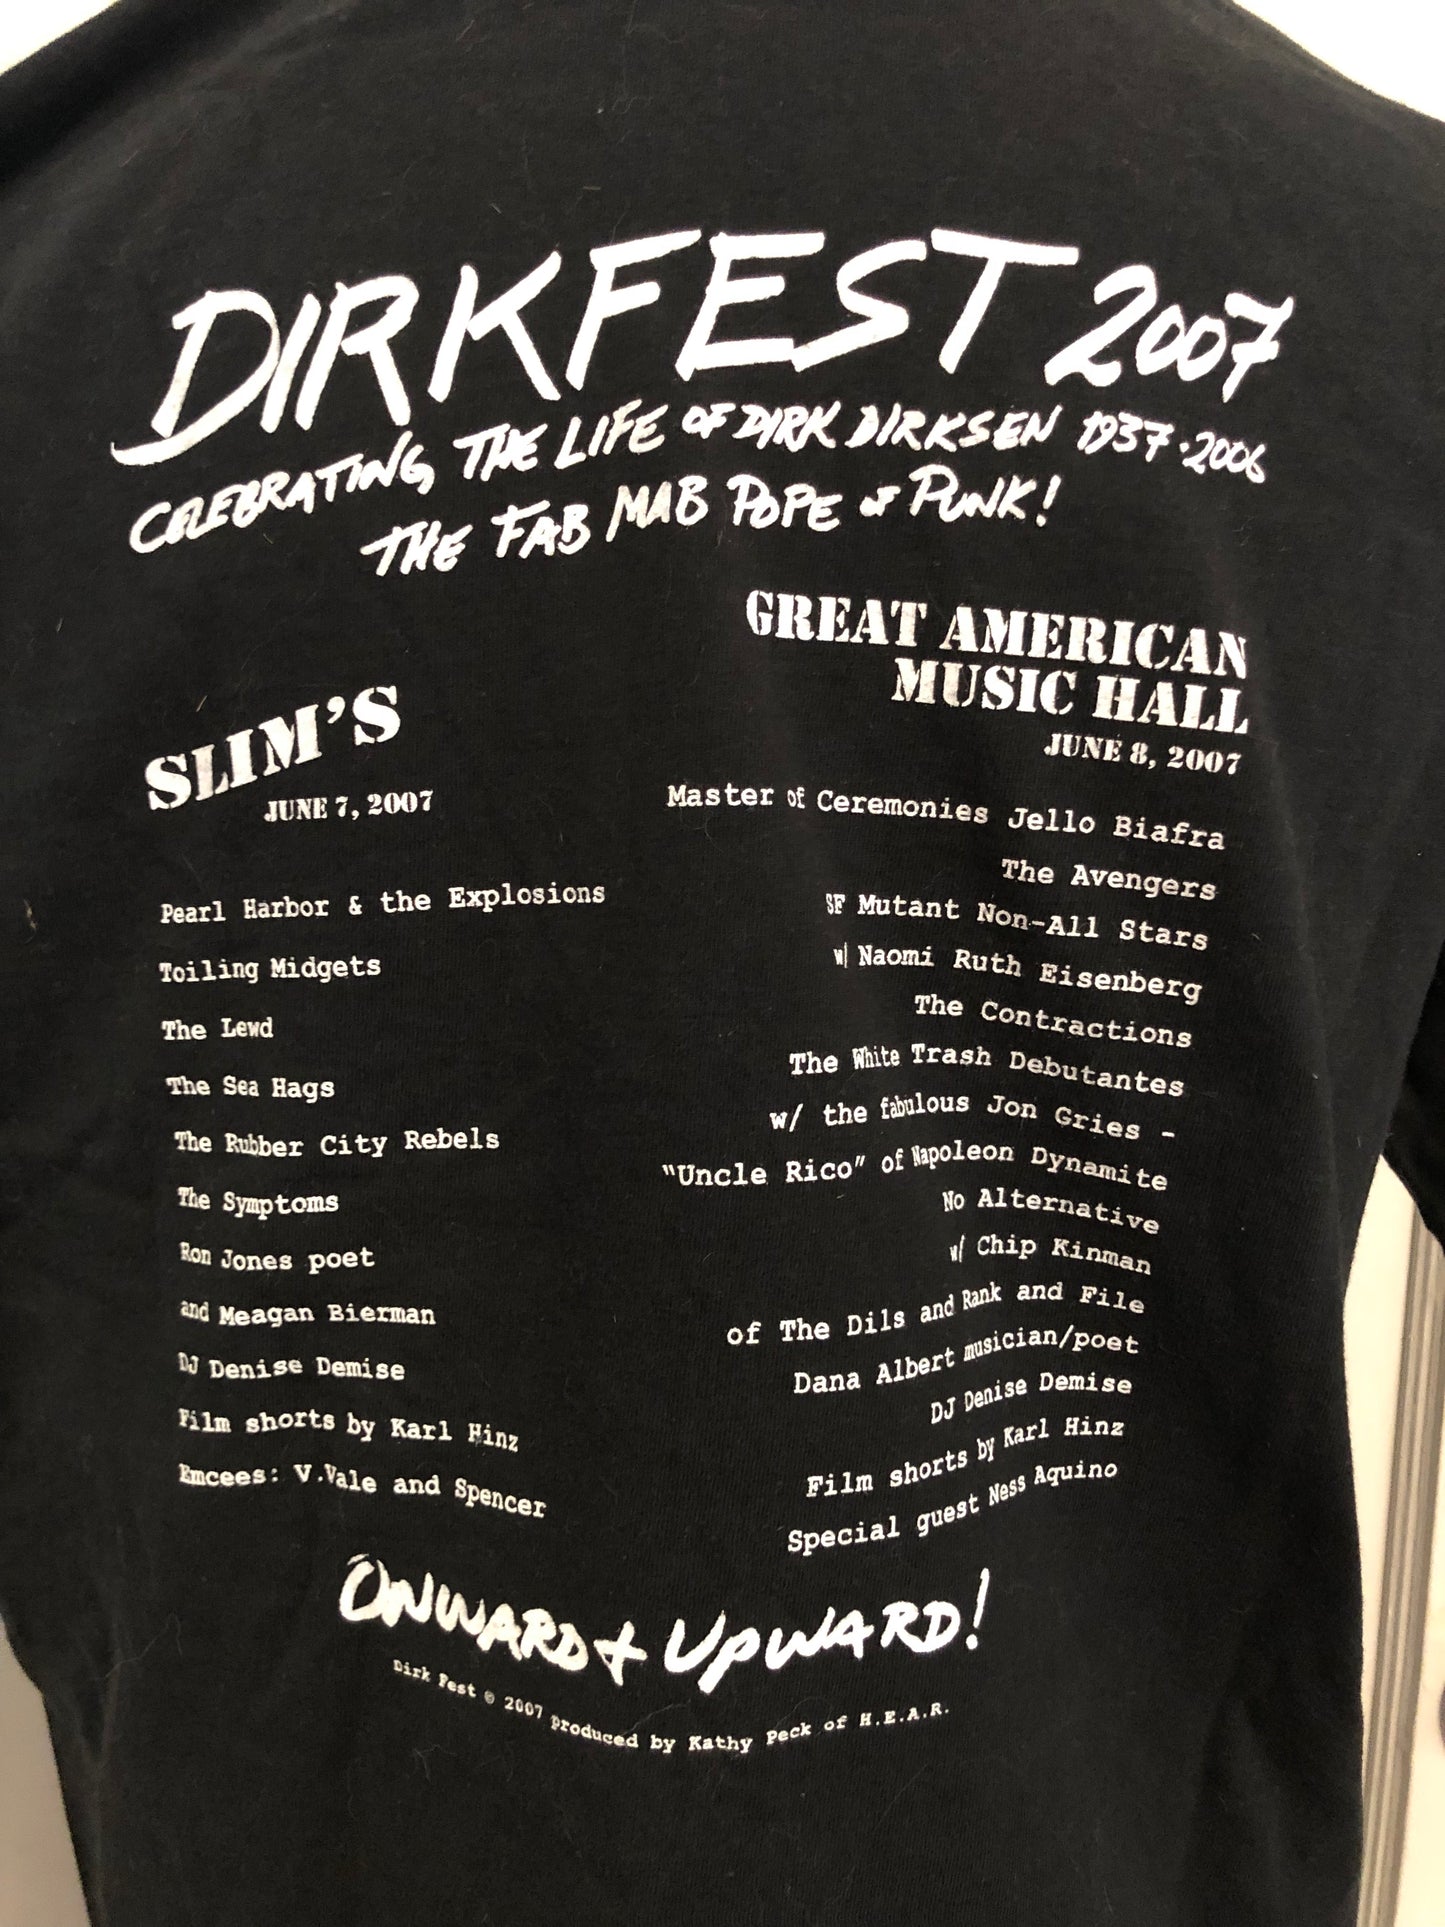 Winston Smith "Dirk Fest 2007" Shirt